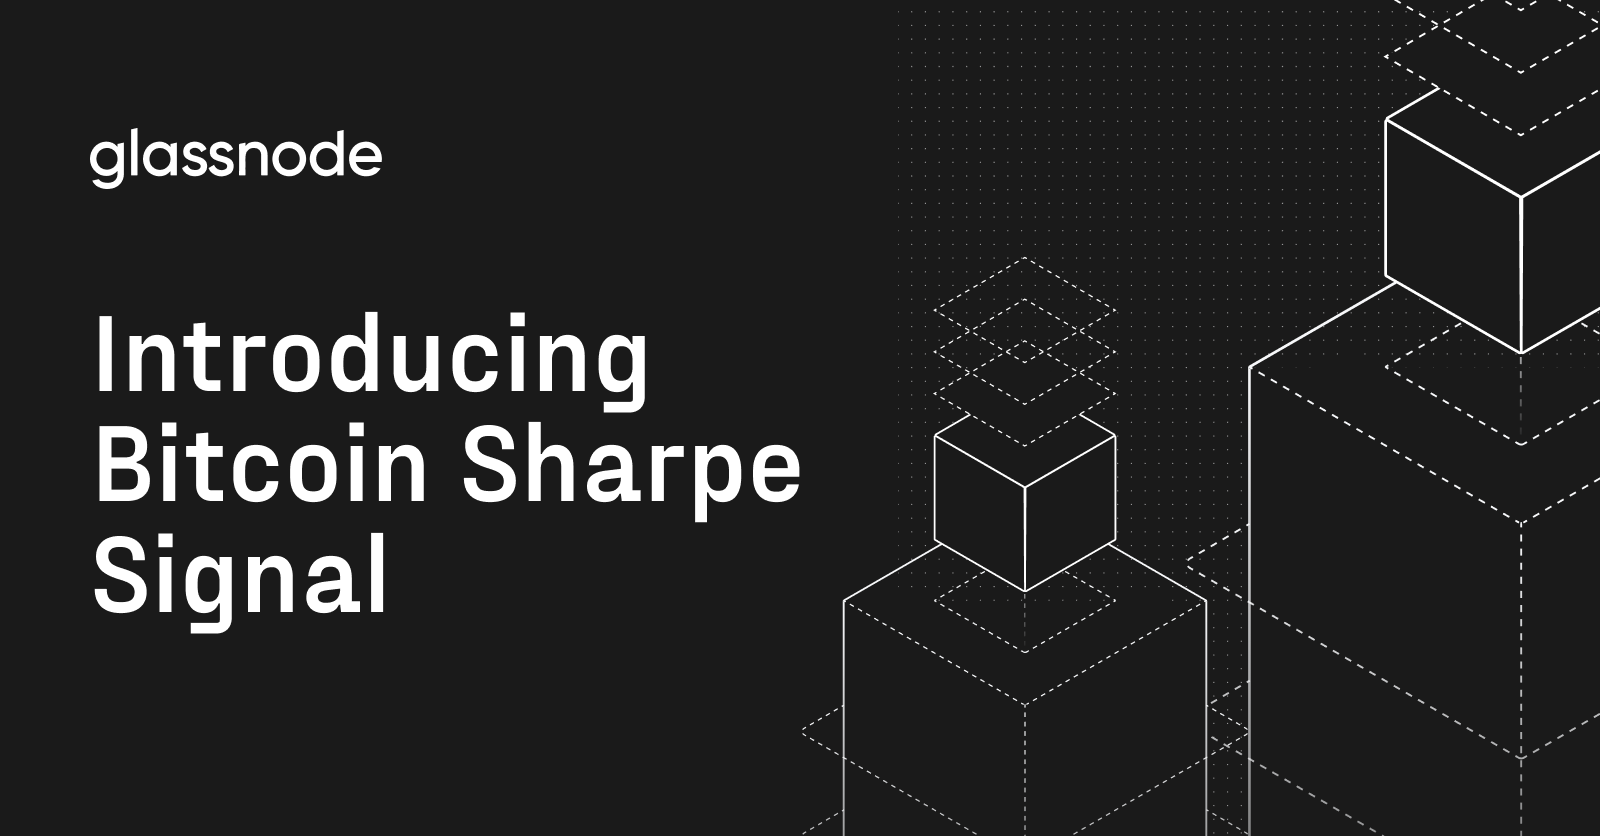 Introducing Bitcoin Sharpe Signal: Simplifying Bitcoin Trades with Glassnode Data